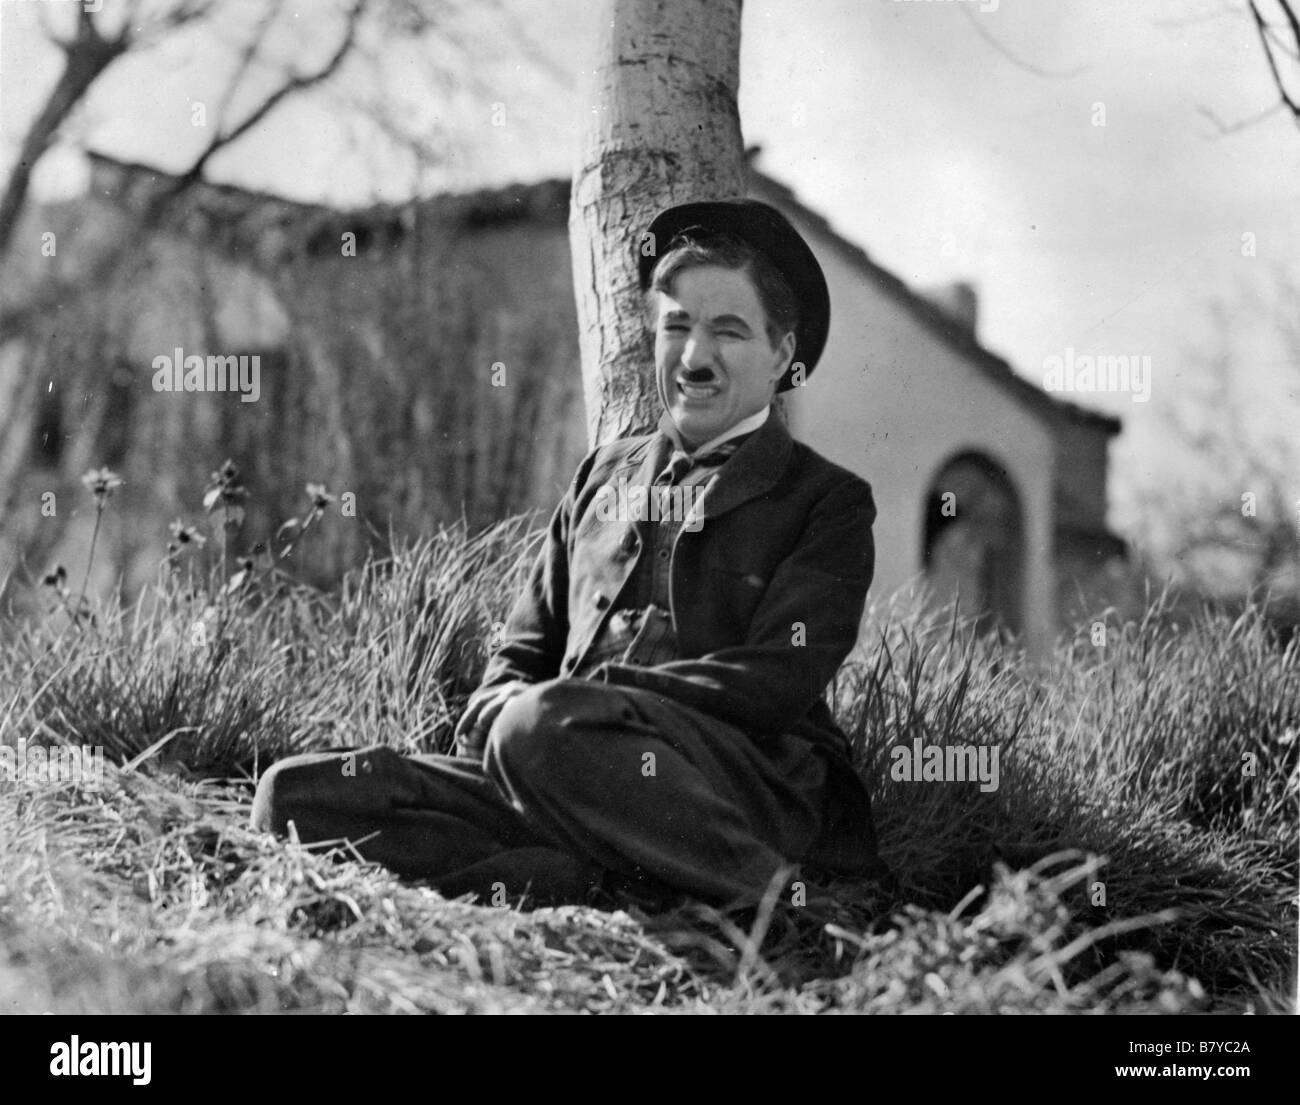 charlie Chaplin Charles Chaplin Charlie Chaplin  Year: Charles Chaplin - Acteur et Director d'origine anglaise 1889-1977 Stock Photo